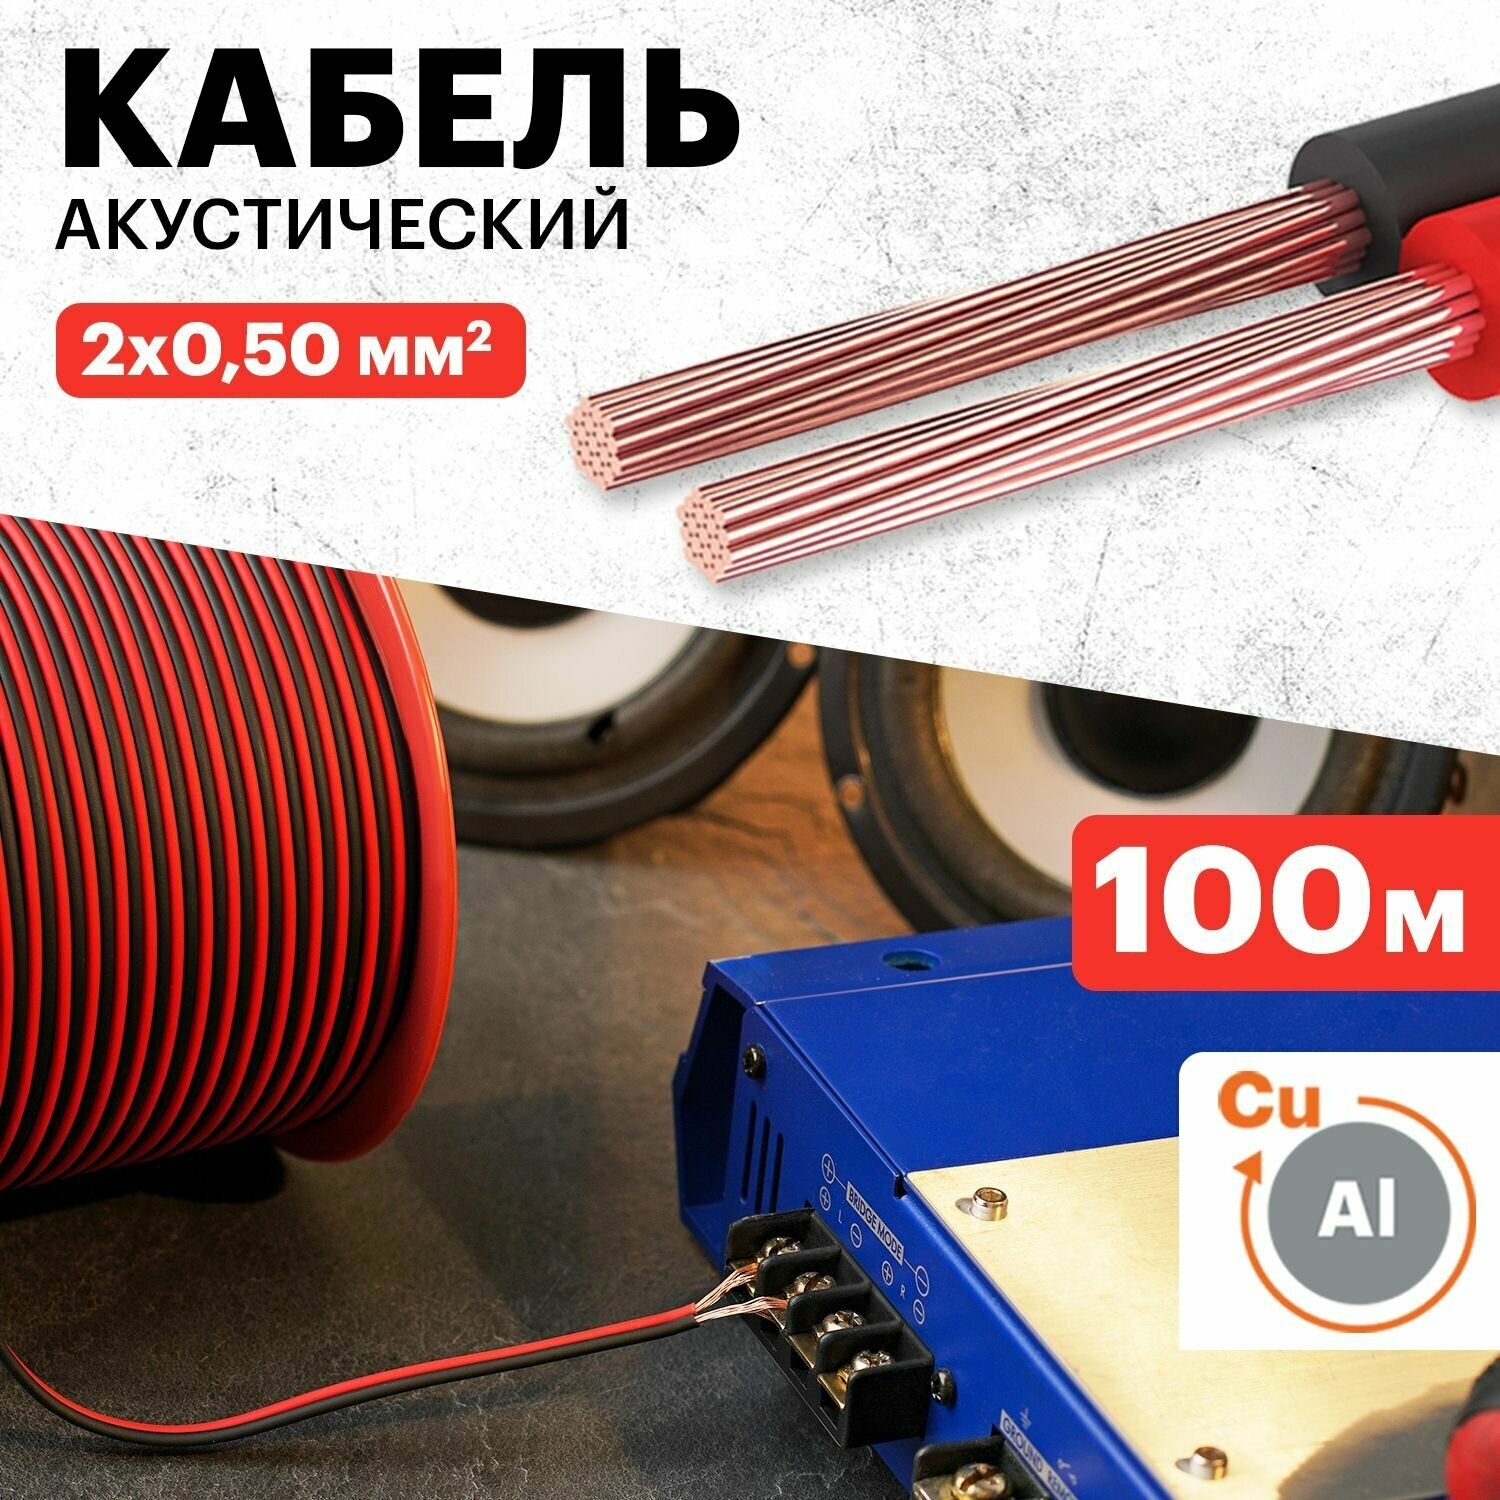 Акустический кабель швпм 2х0,50 мм2, бухта 100 м